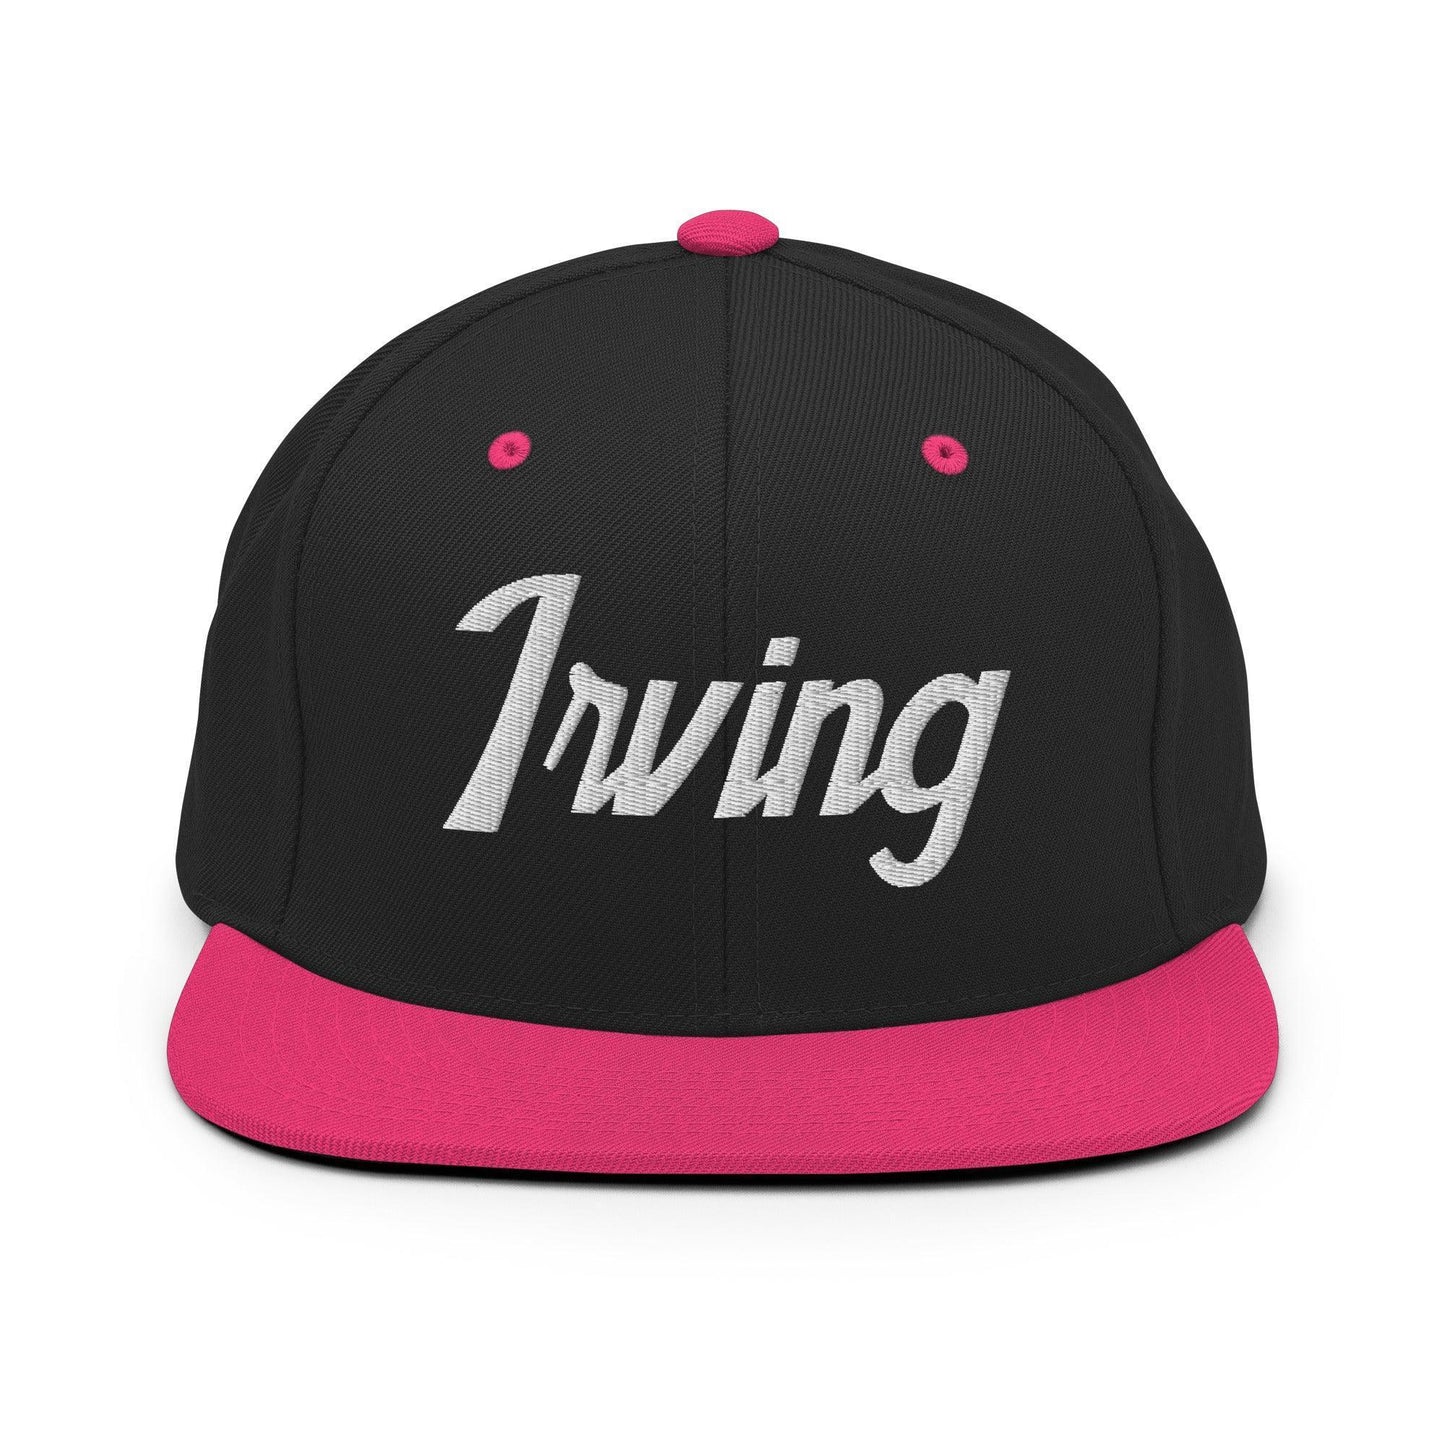 Irving Script Snapback Hat Black Neon Pink